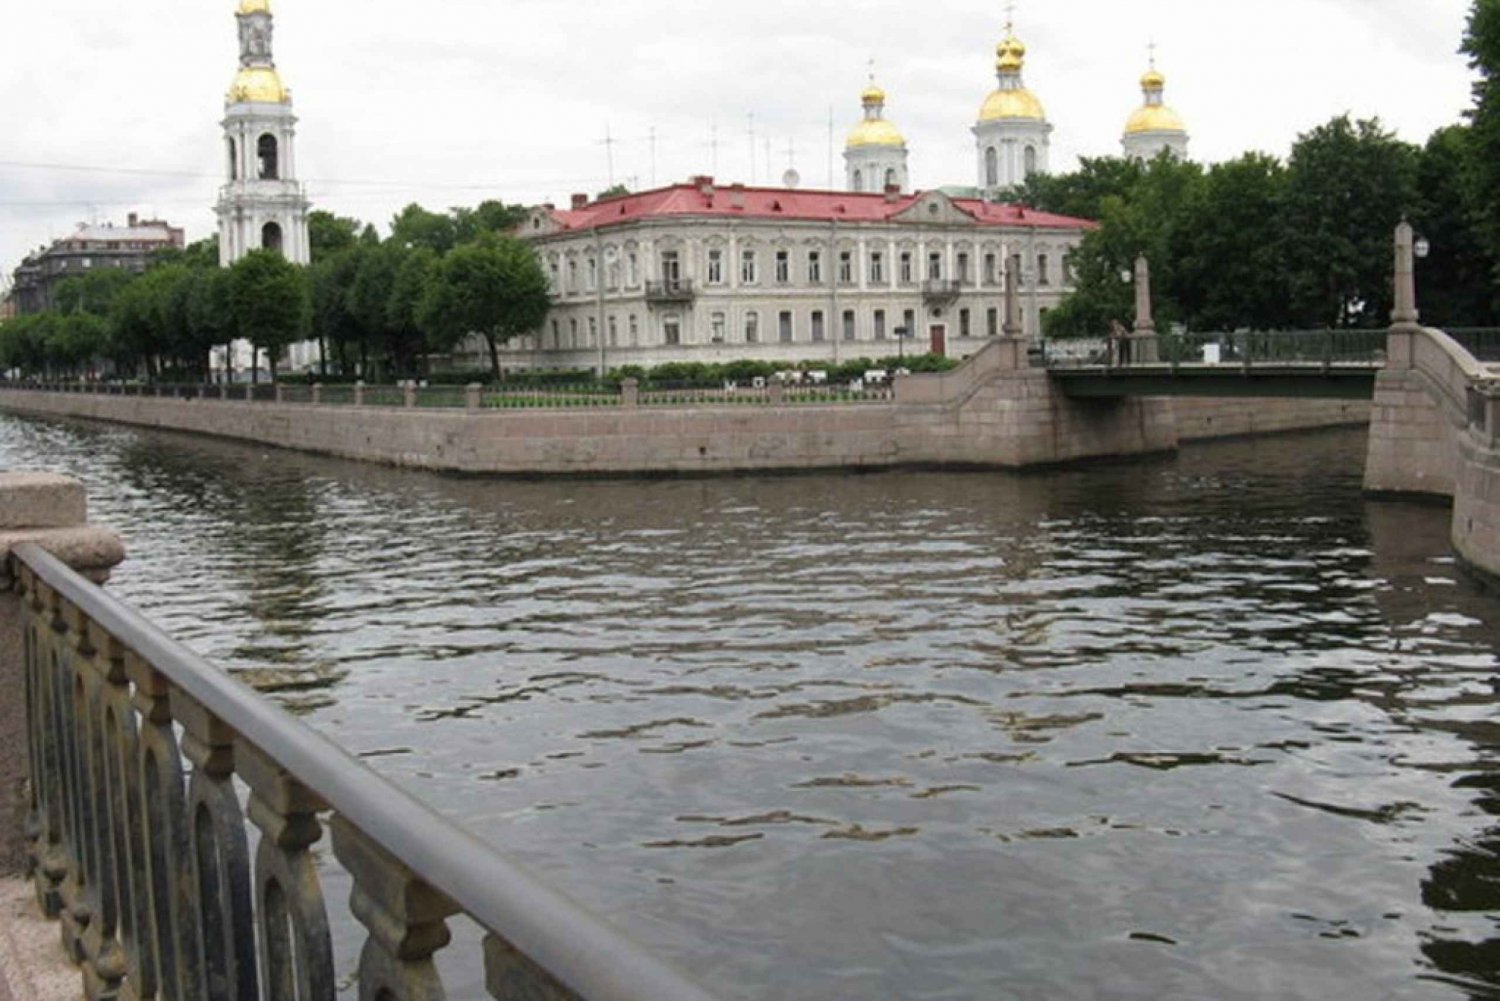 St Petersburg Boat Trip and Walking Tour